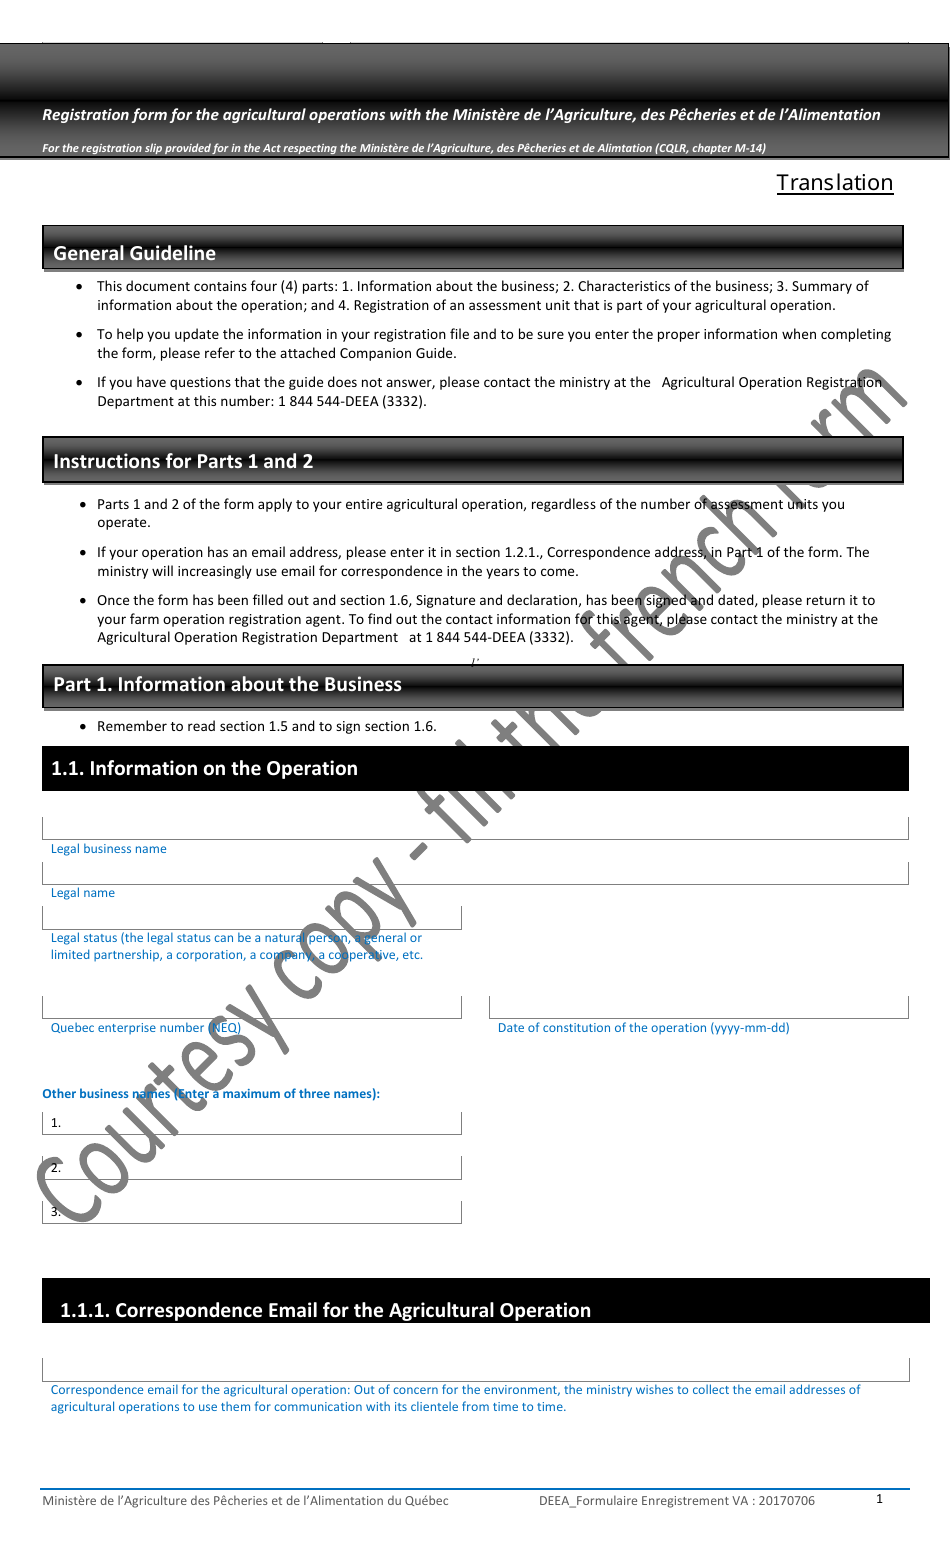 Registration Form for the Agricultural Operations With the Ministere De Lagriculture, DES Pecheries Et De Lalimentation - Quebec, Canada, Page 1